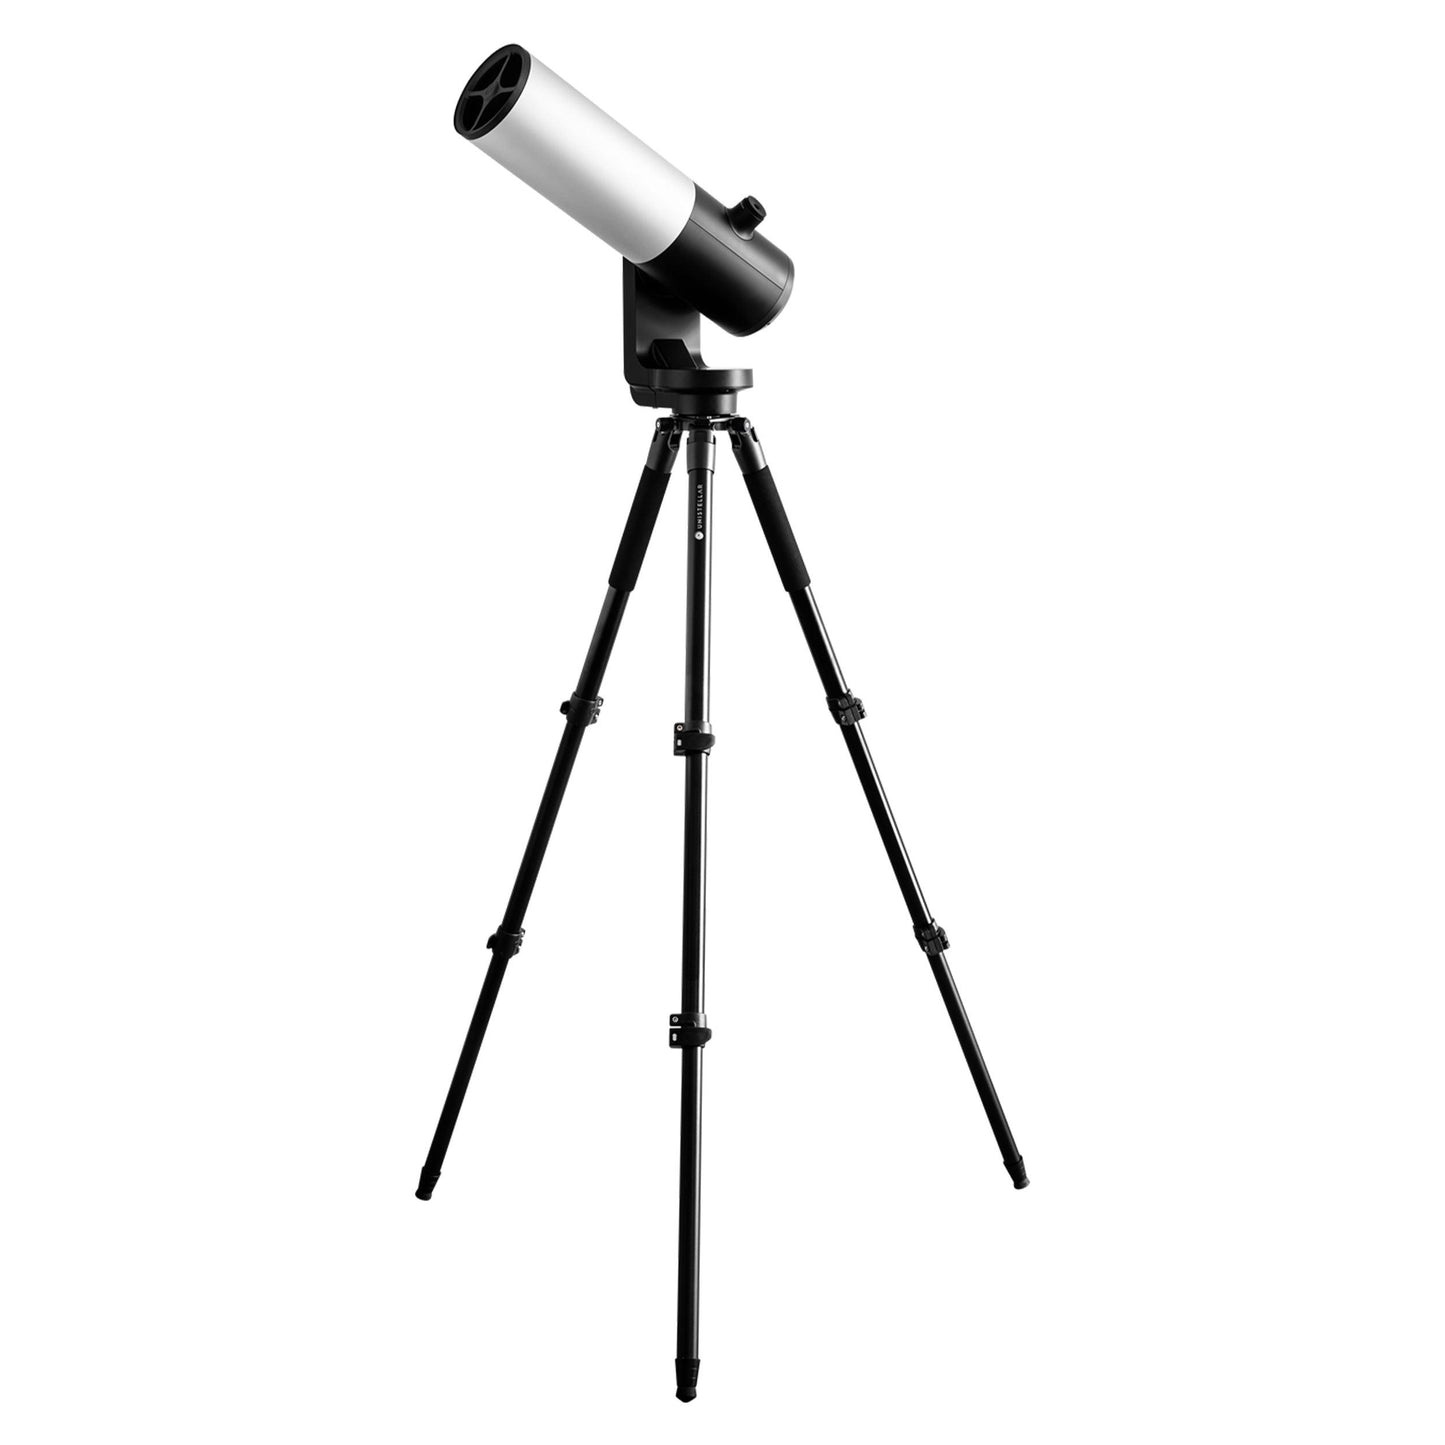 Unistellar eVscope 2 Digital Telescope - Smart, Compact, and User-Friendly Telescope - Silverlight Optics